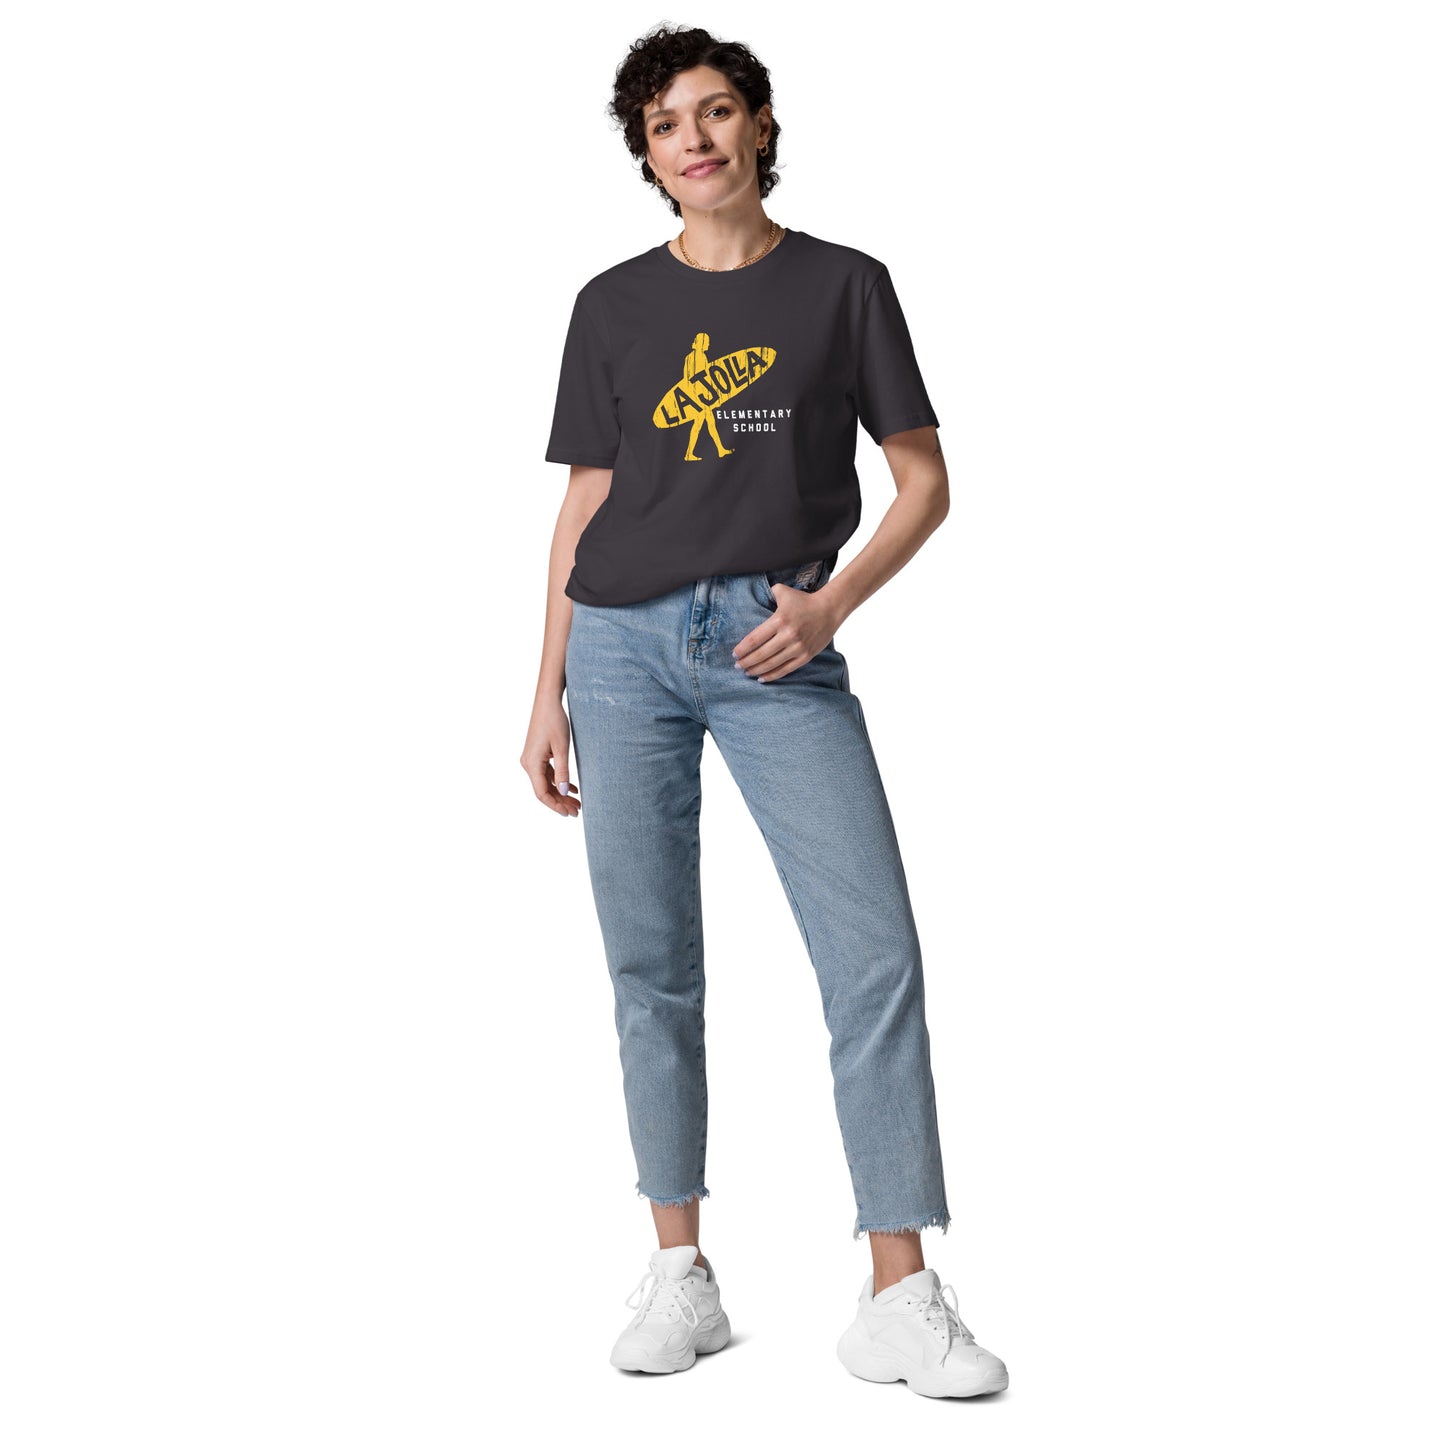 Surfer Collection: Adult Unisex Organic Cotton T-shirt